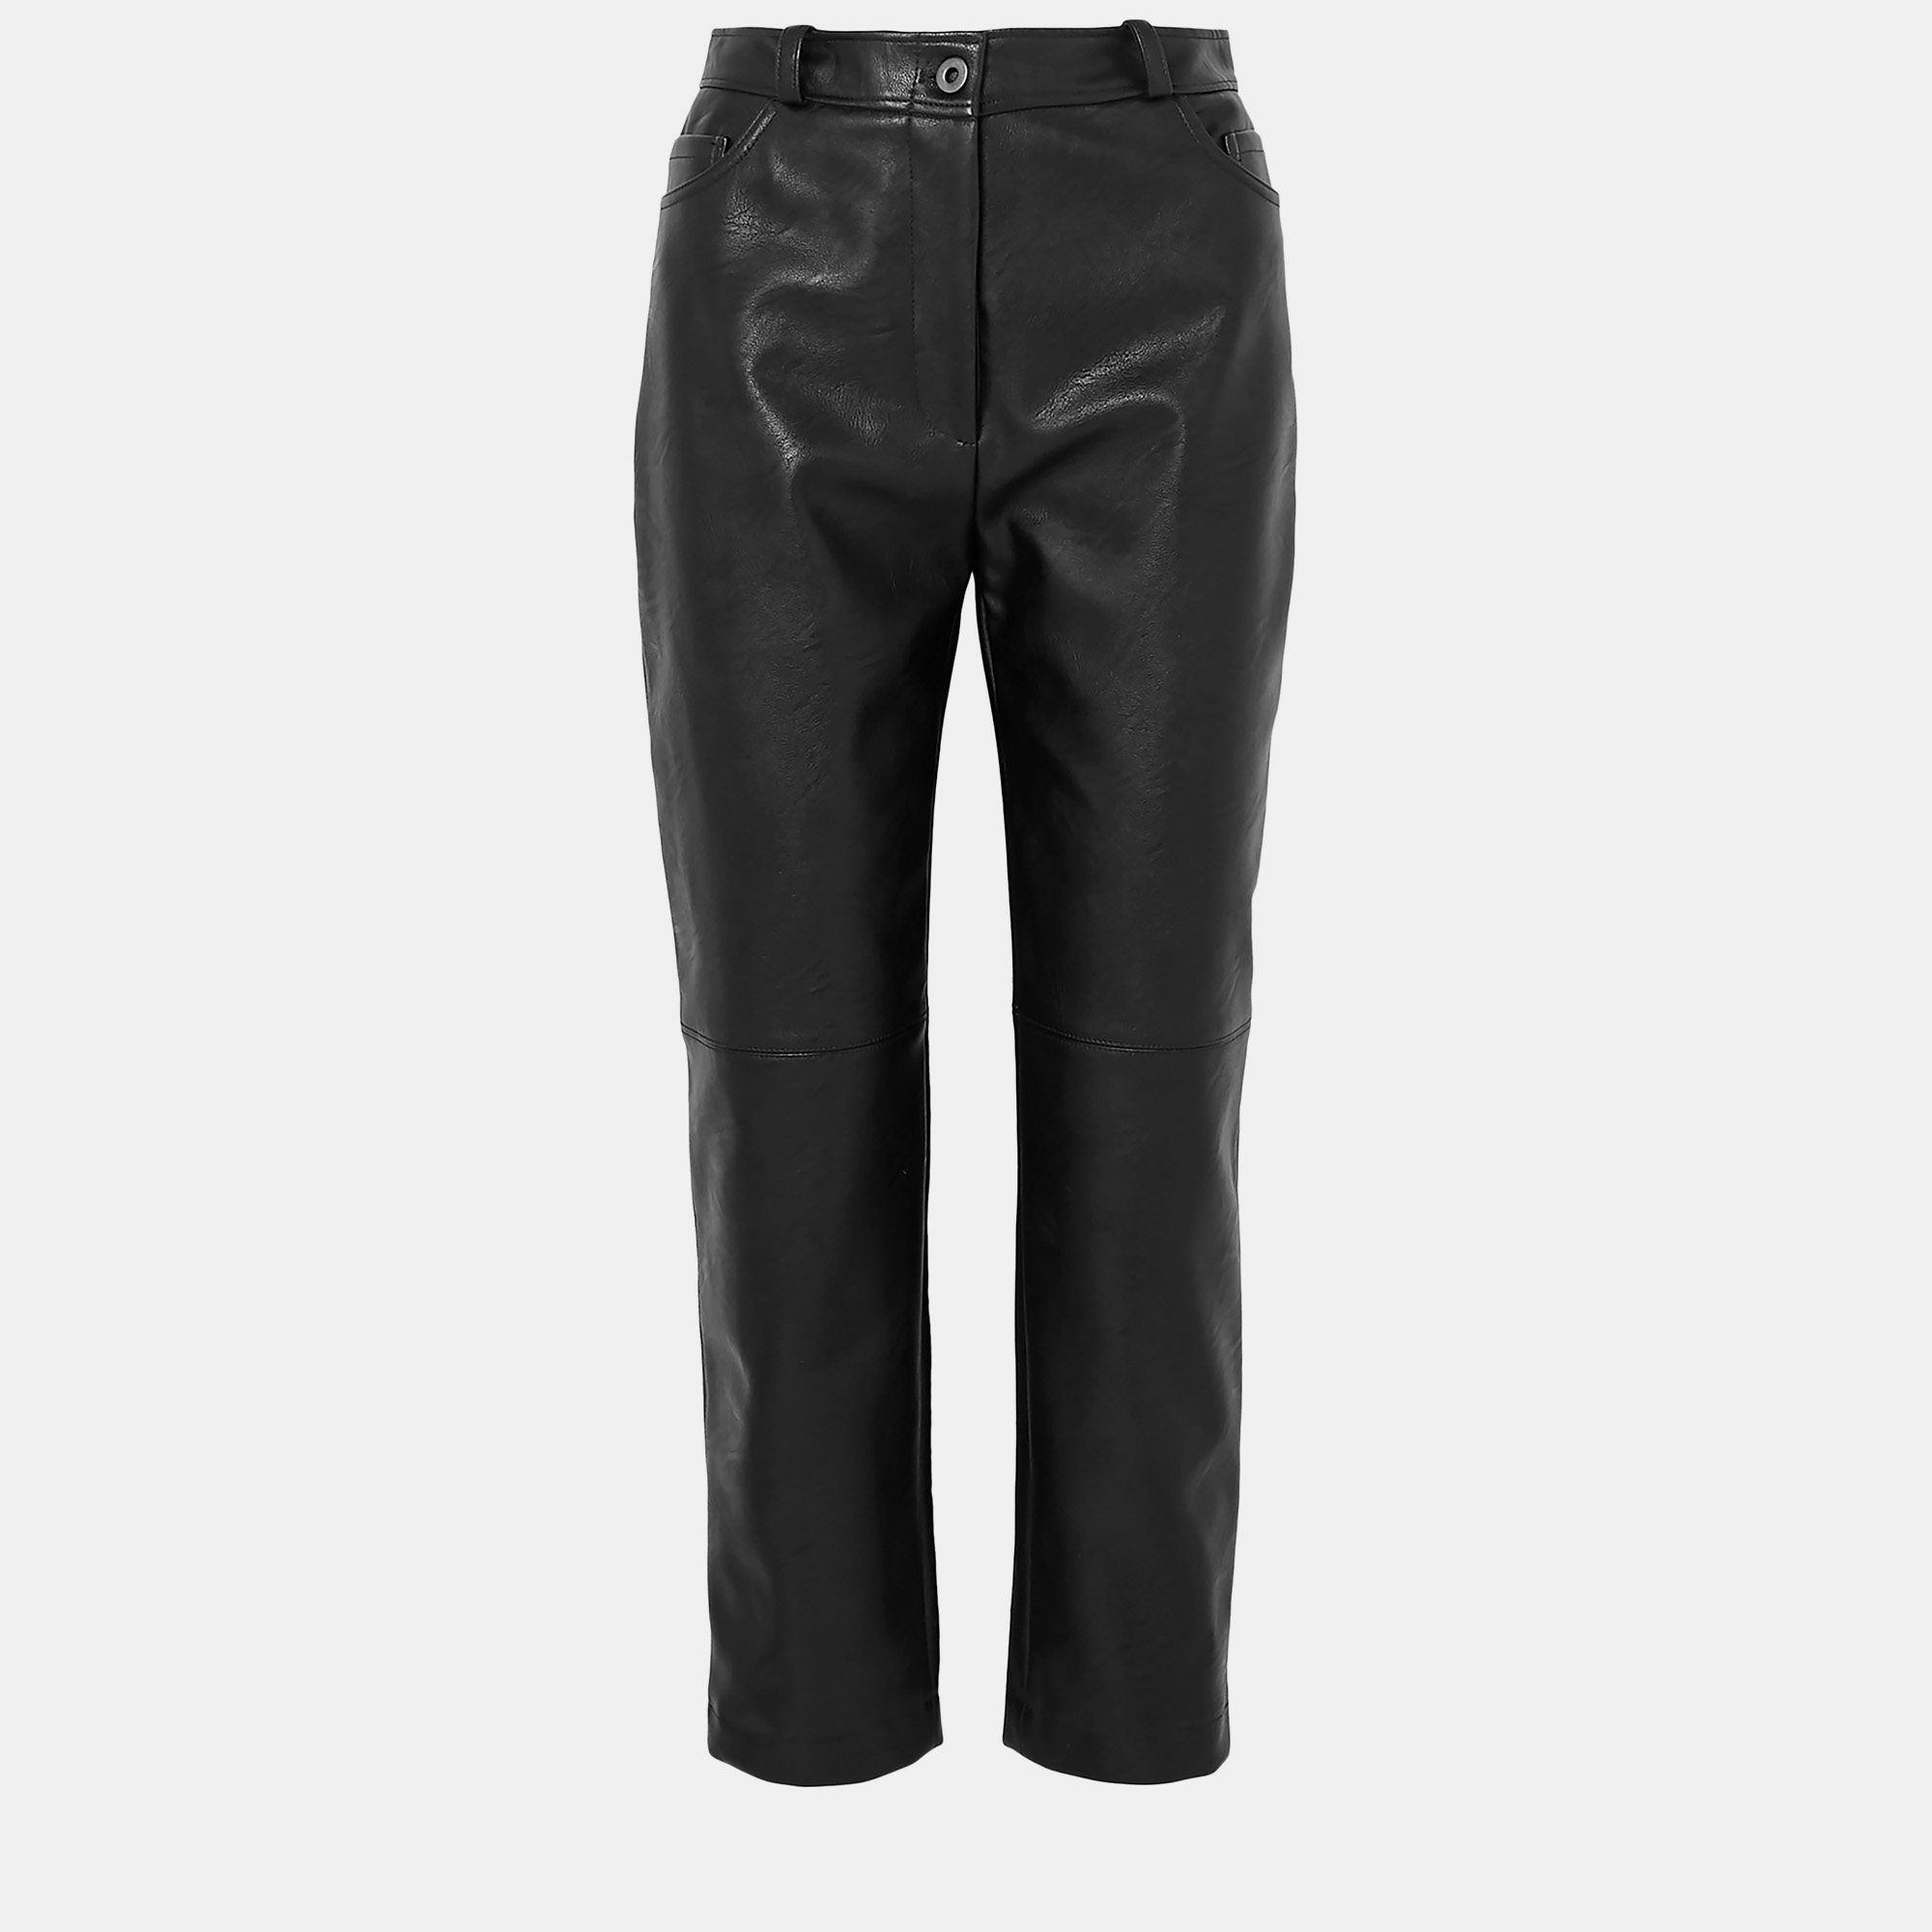 Stella mccartney black faux leather straight leg pants size 40